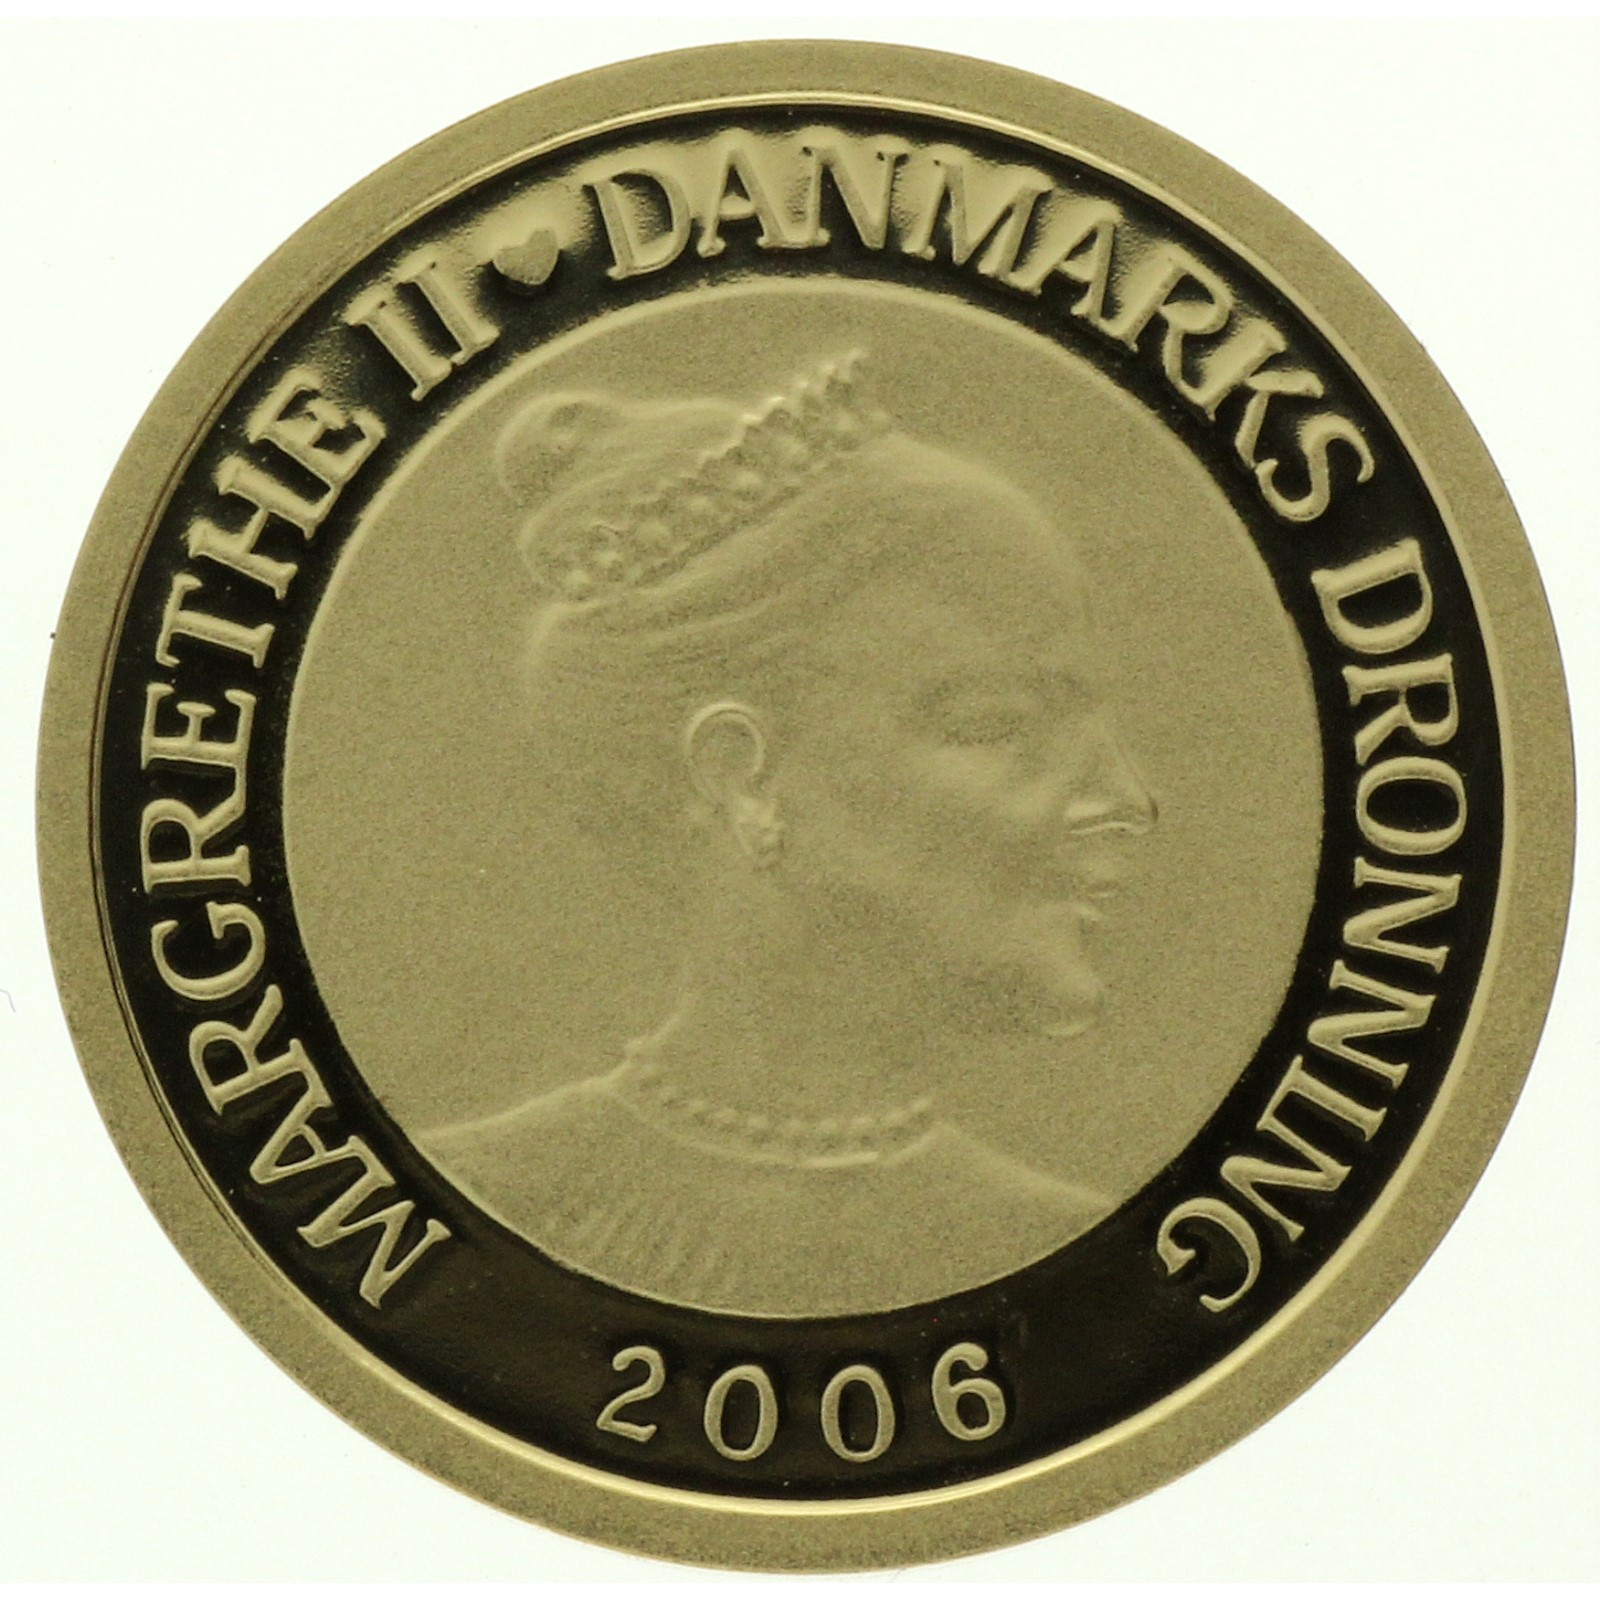 Denmark - 10 kroner - 2006 - Margrethe II - The Shadow - 1/4oz